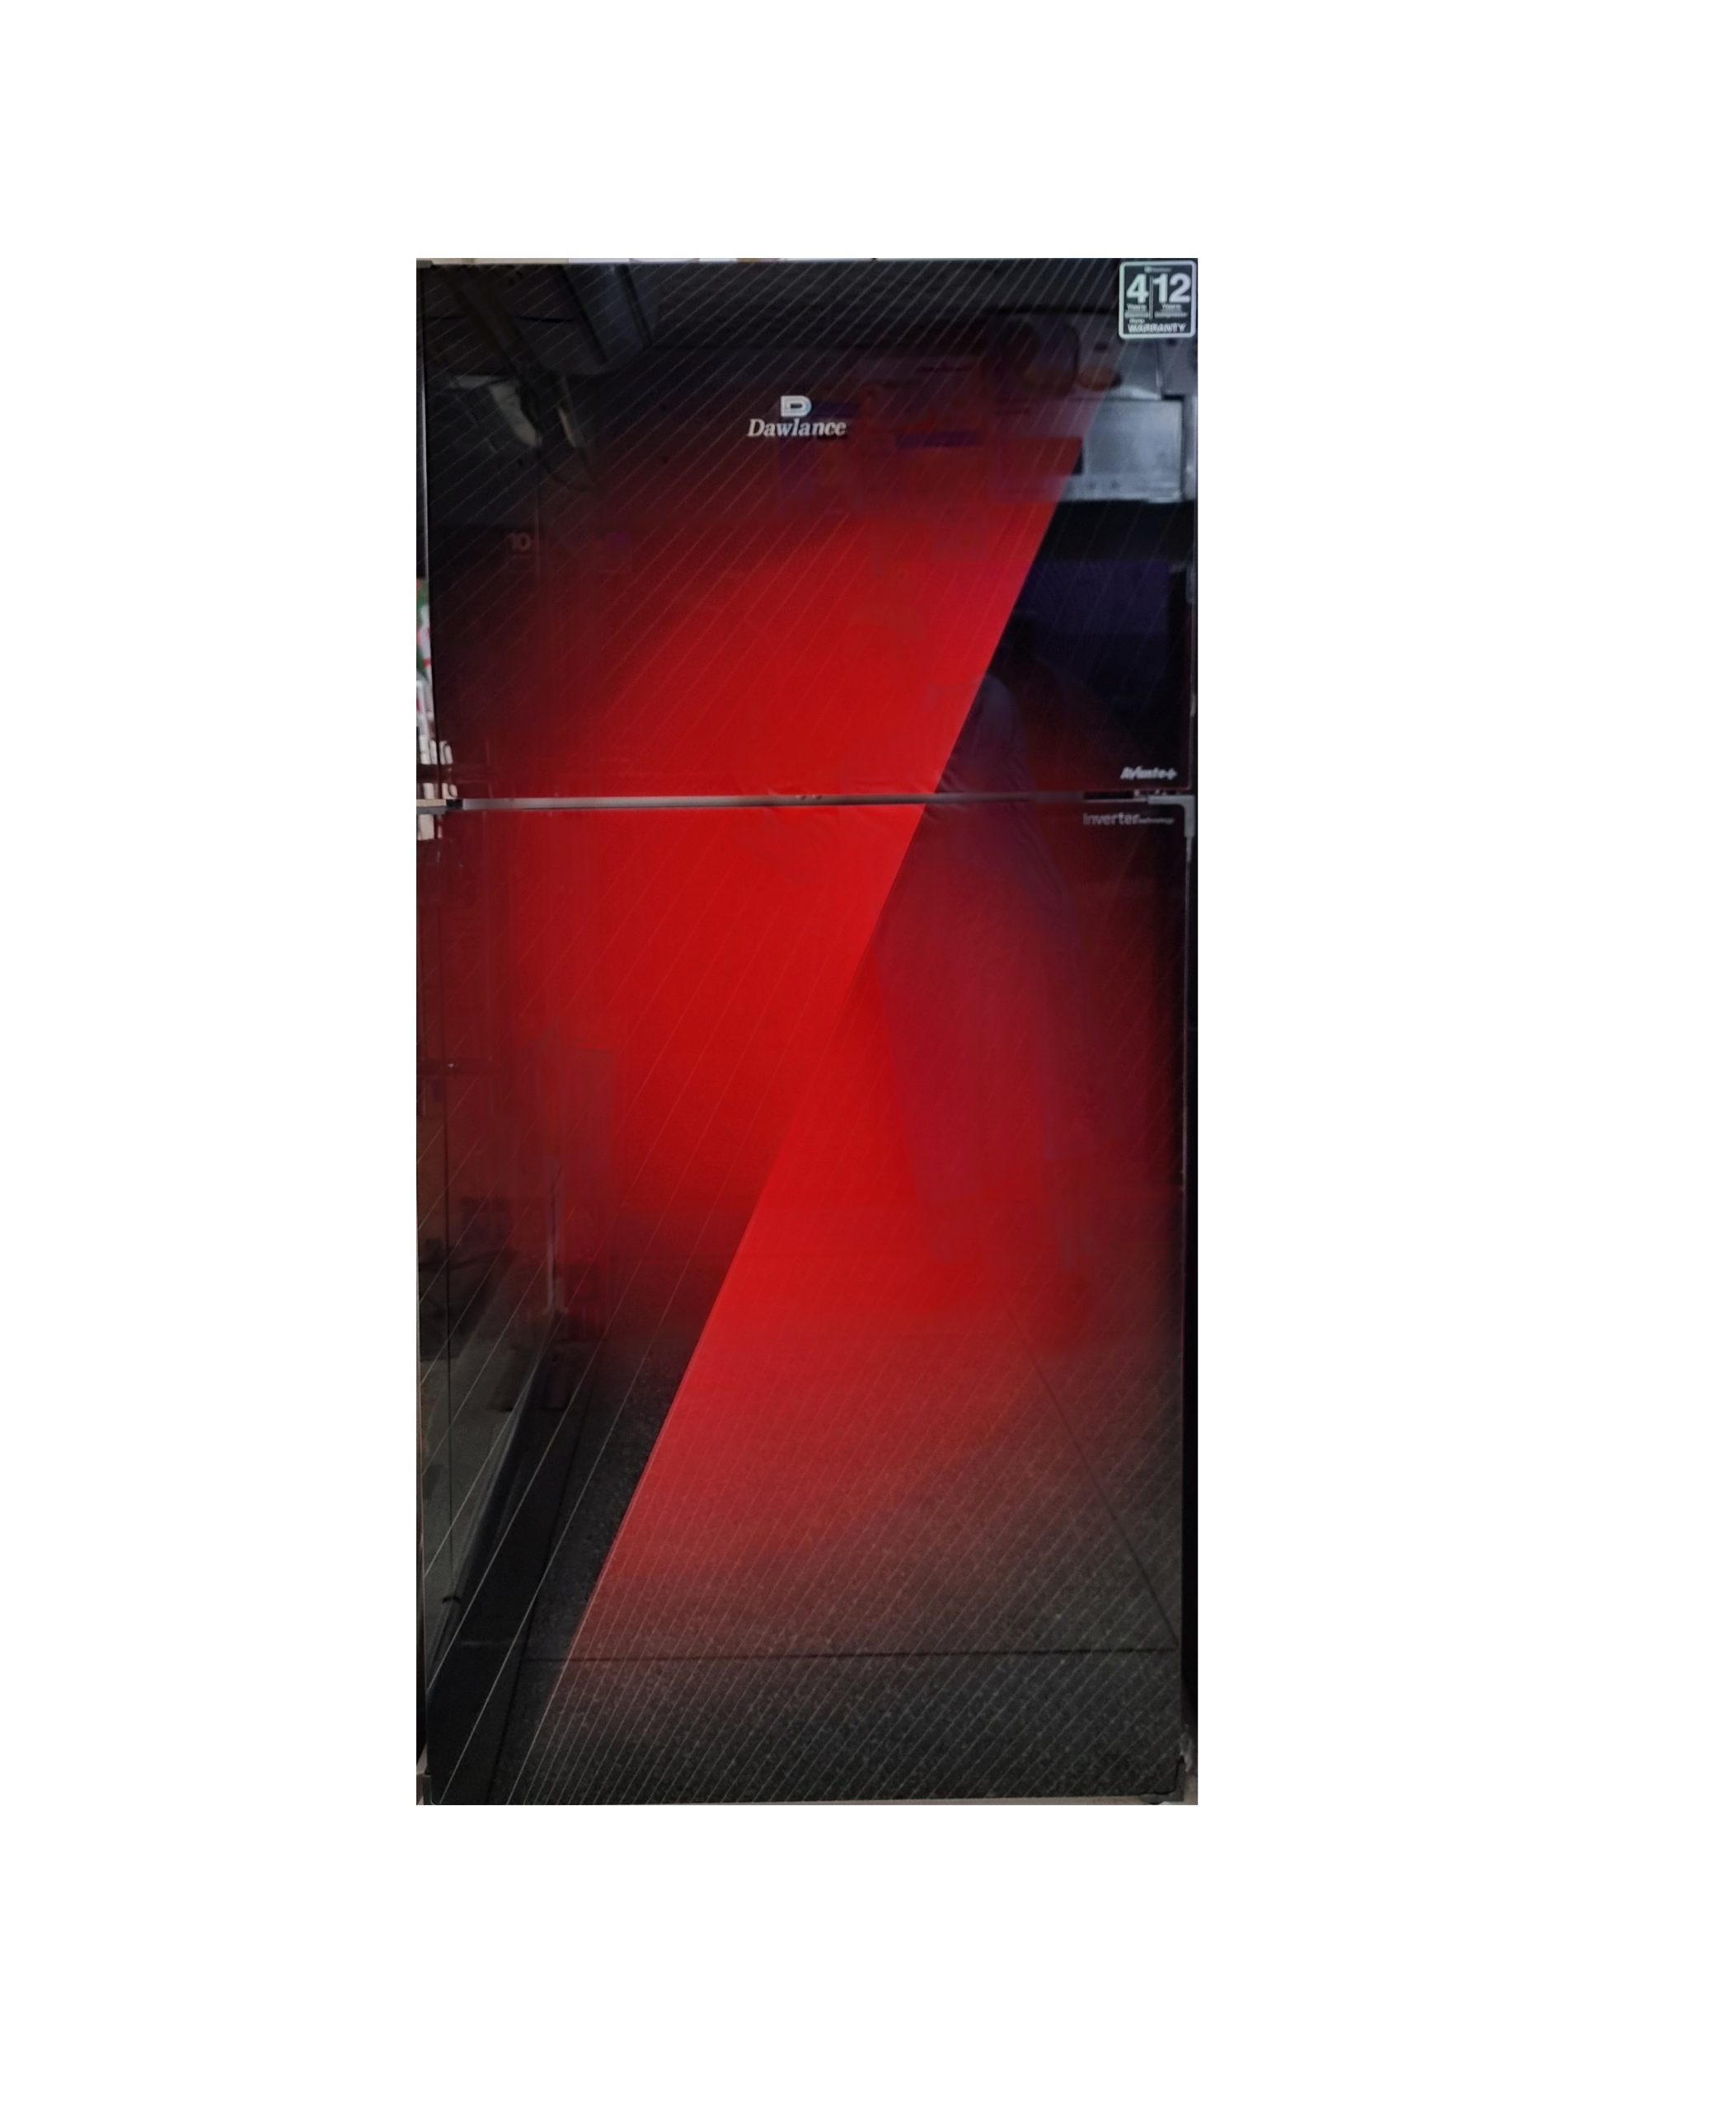 Dawlance refrigerator 91999 Avante + Imperial Red